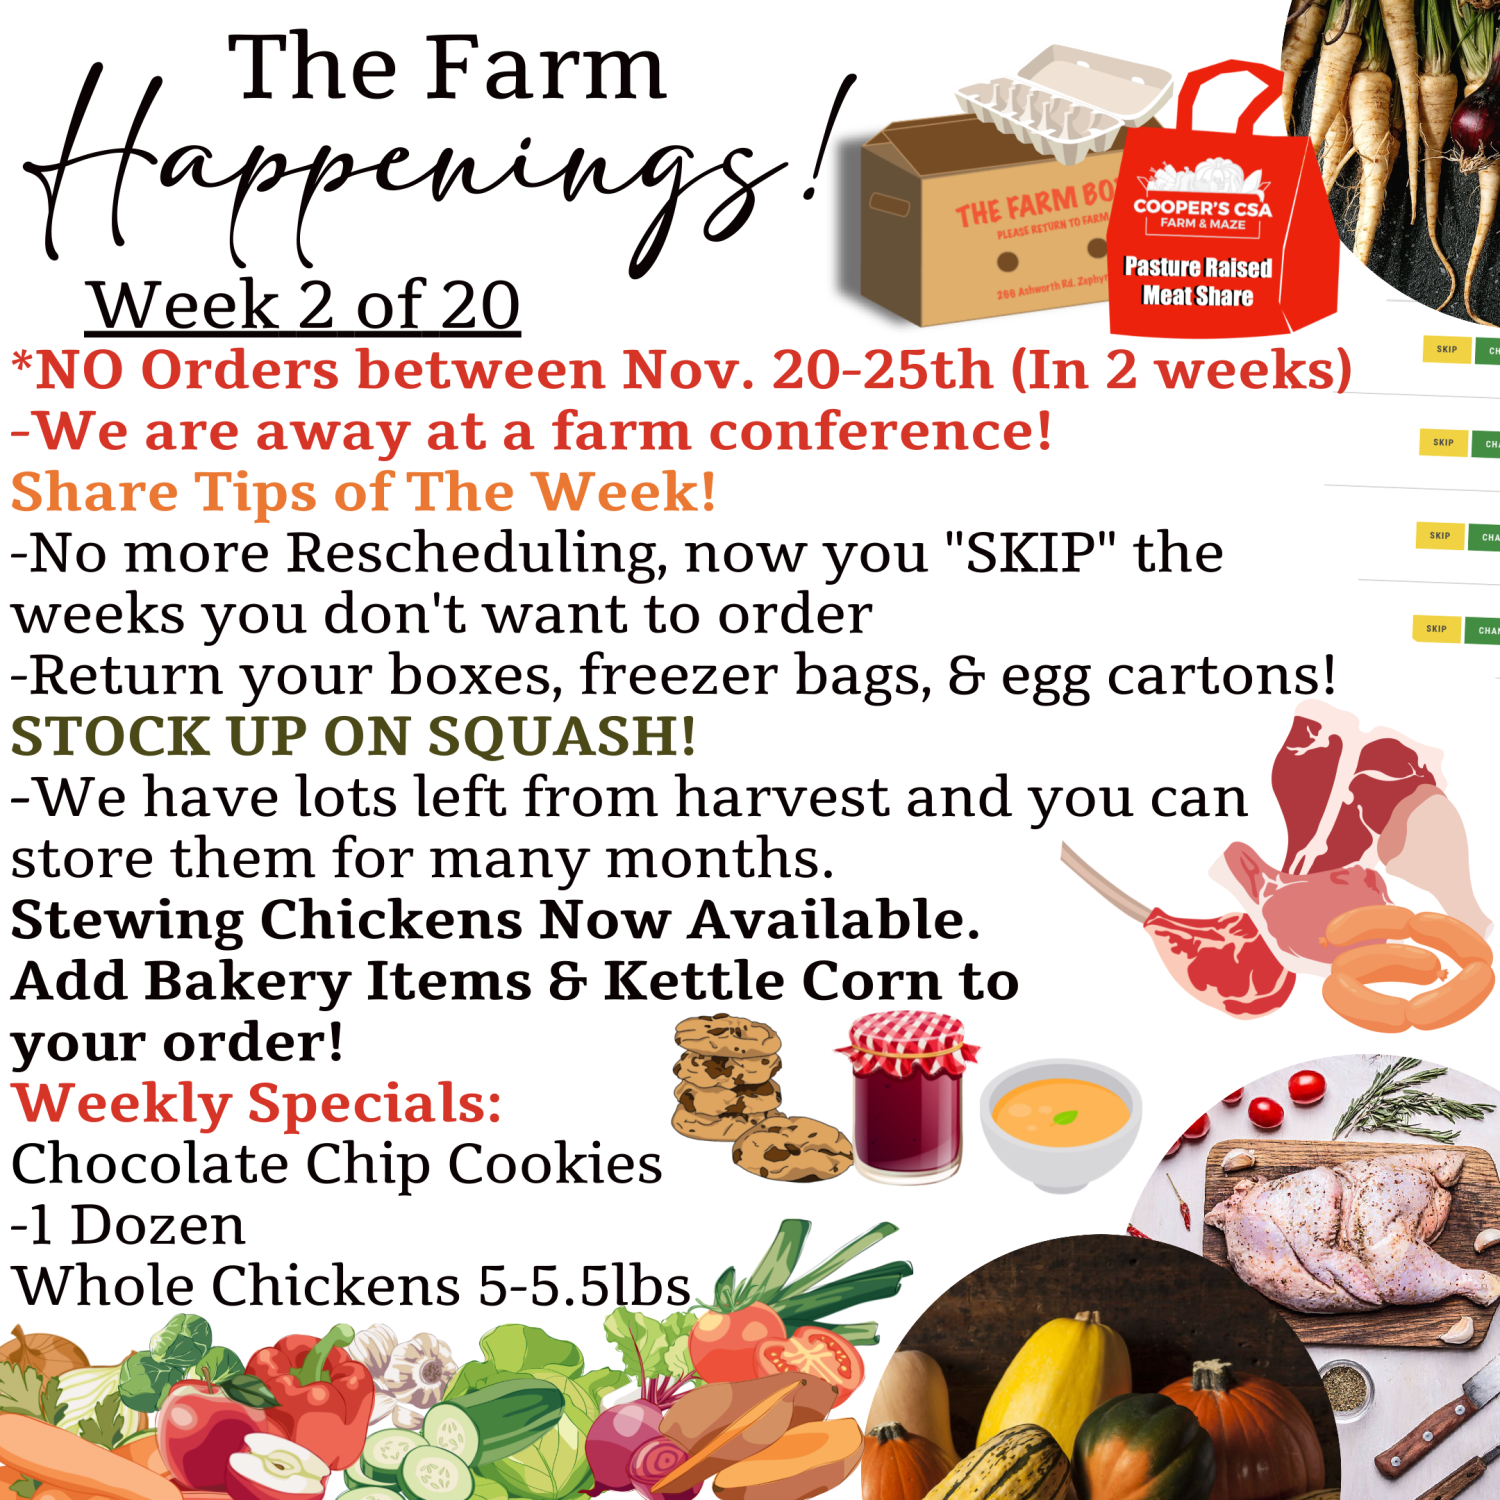 Next Happening: "The Farm Box"-Coopers CSA Farm Farm Happenings Nov 14-18